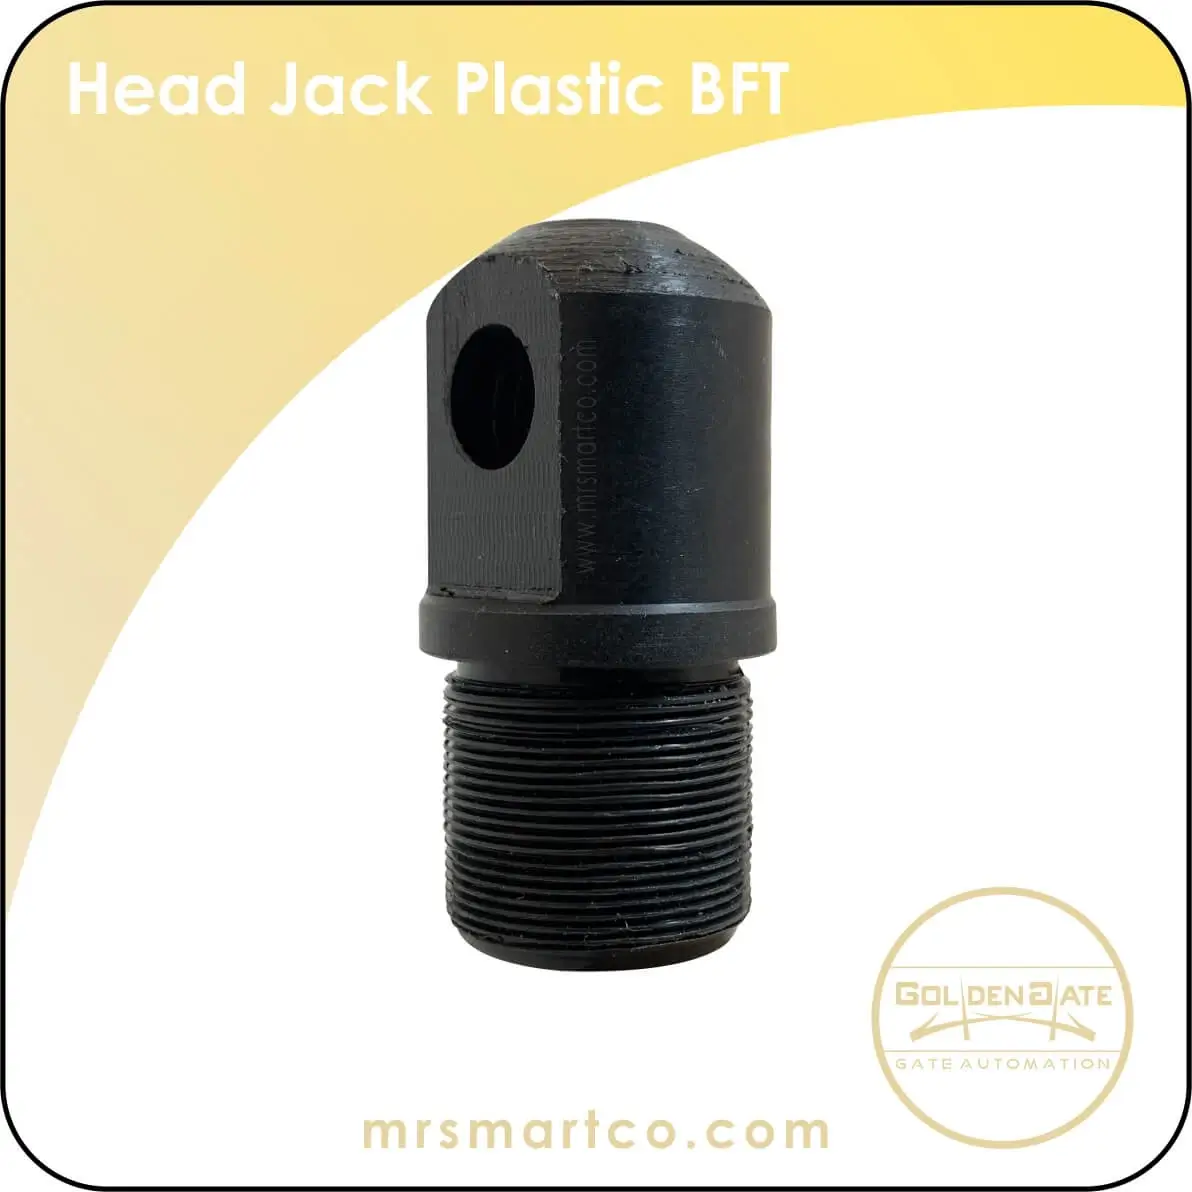 Head Jack Plastic BFT